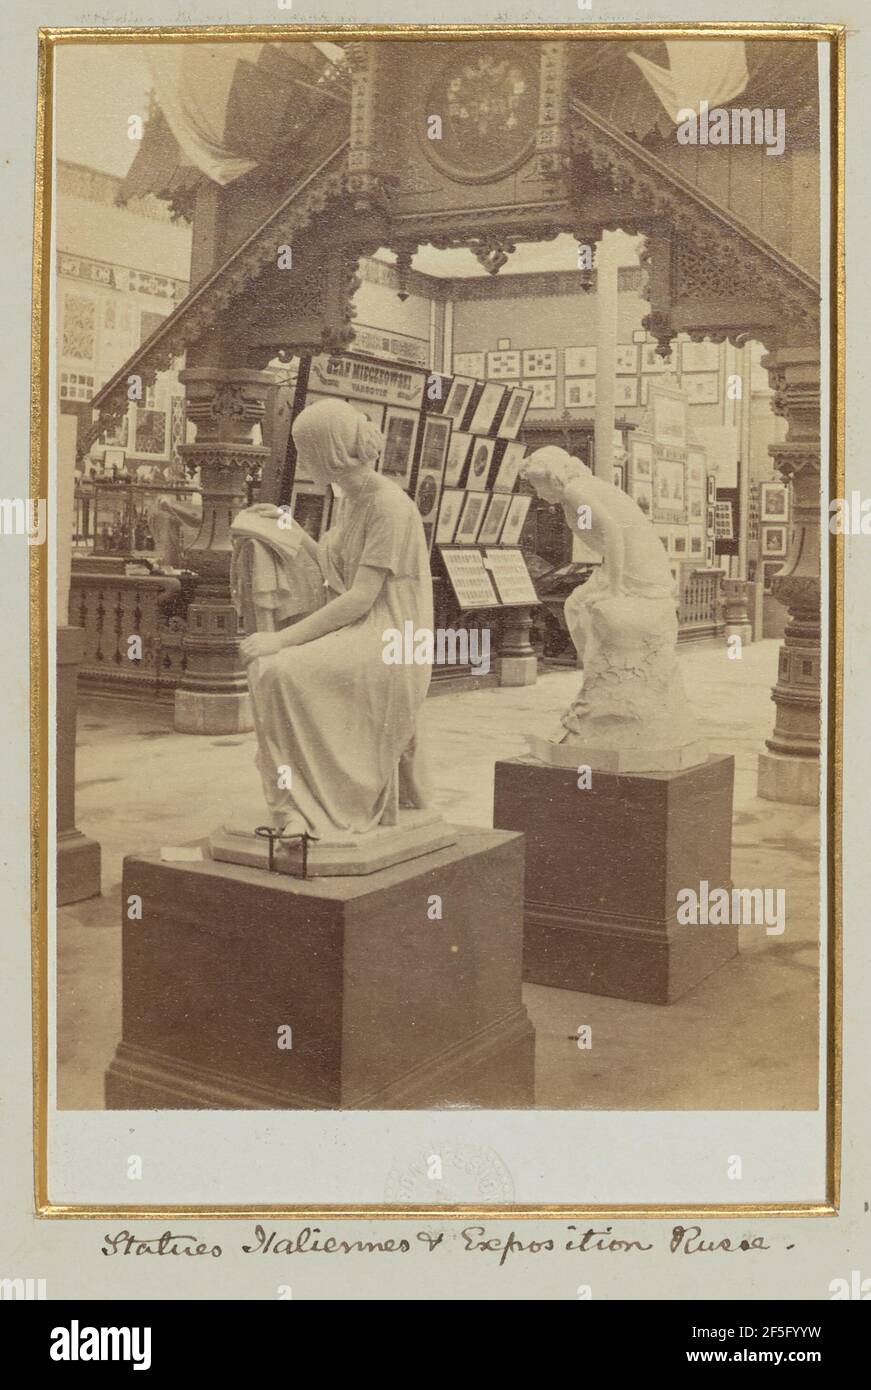 Statues Italiennes et Exposition Russe. Léon & Lévy (French, active 1864 - 1913 or 1920) Stock Photo